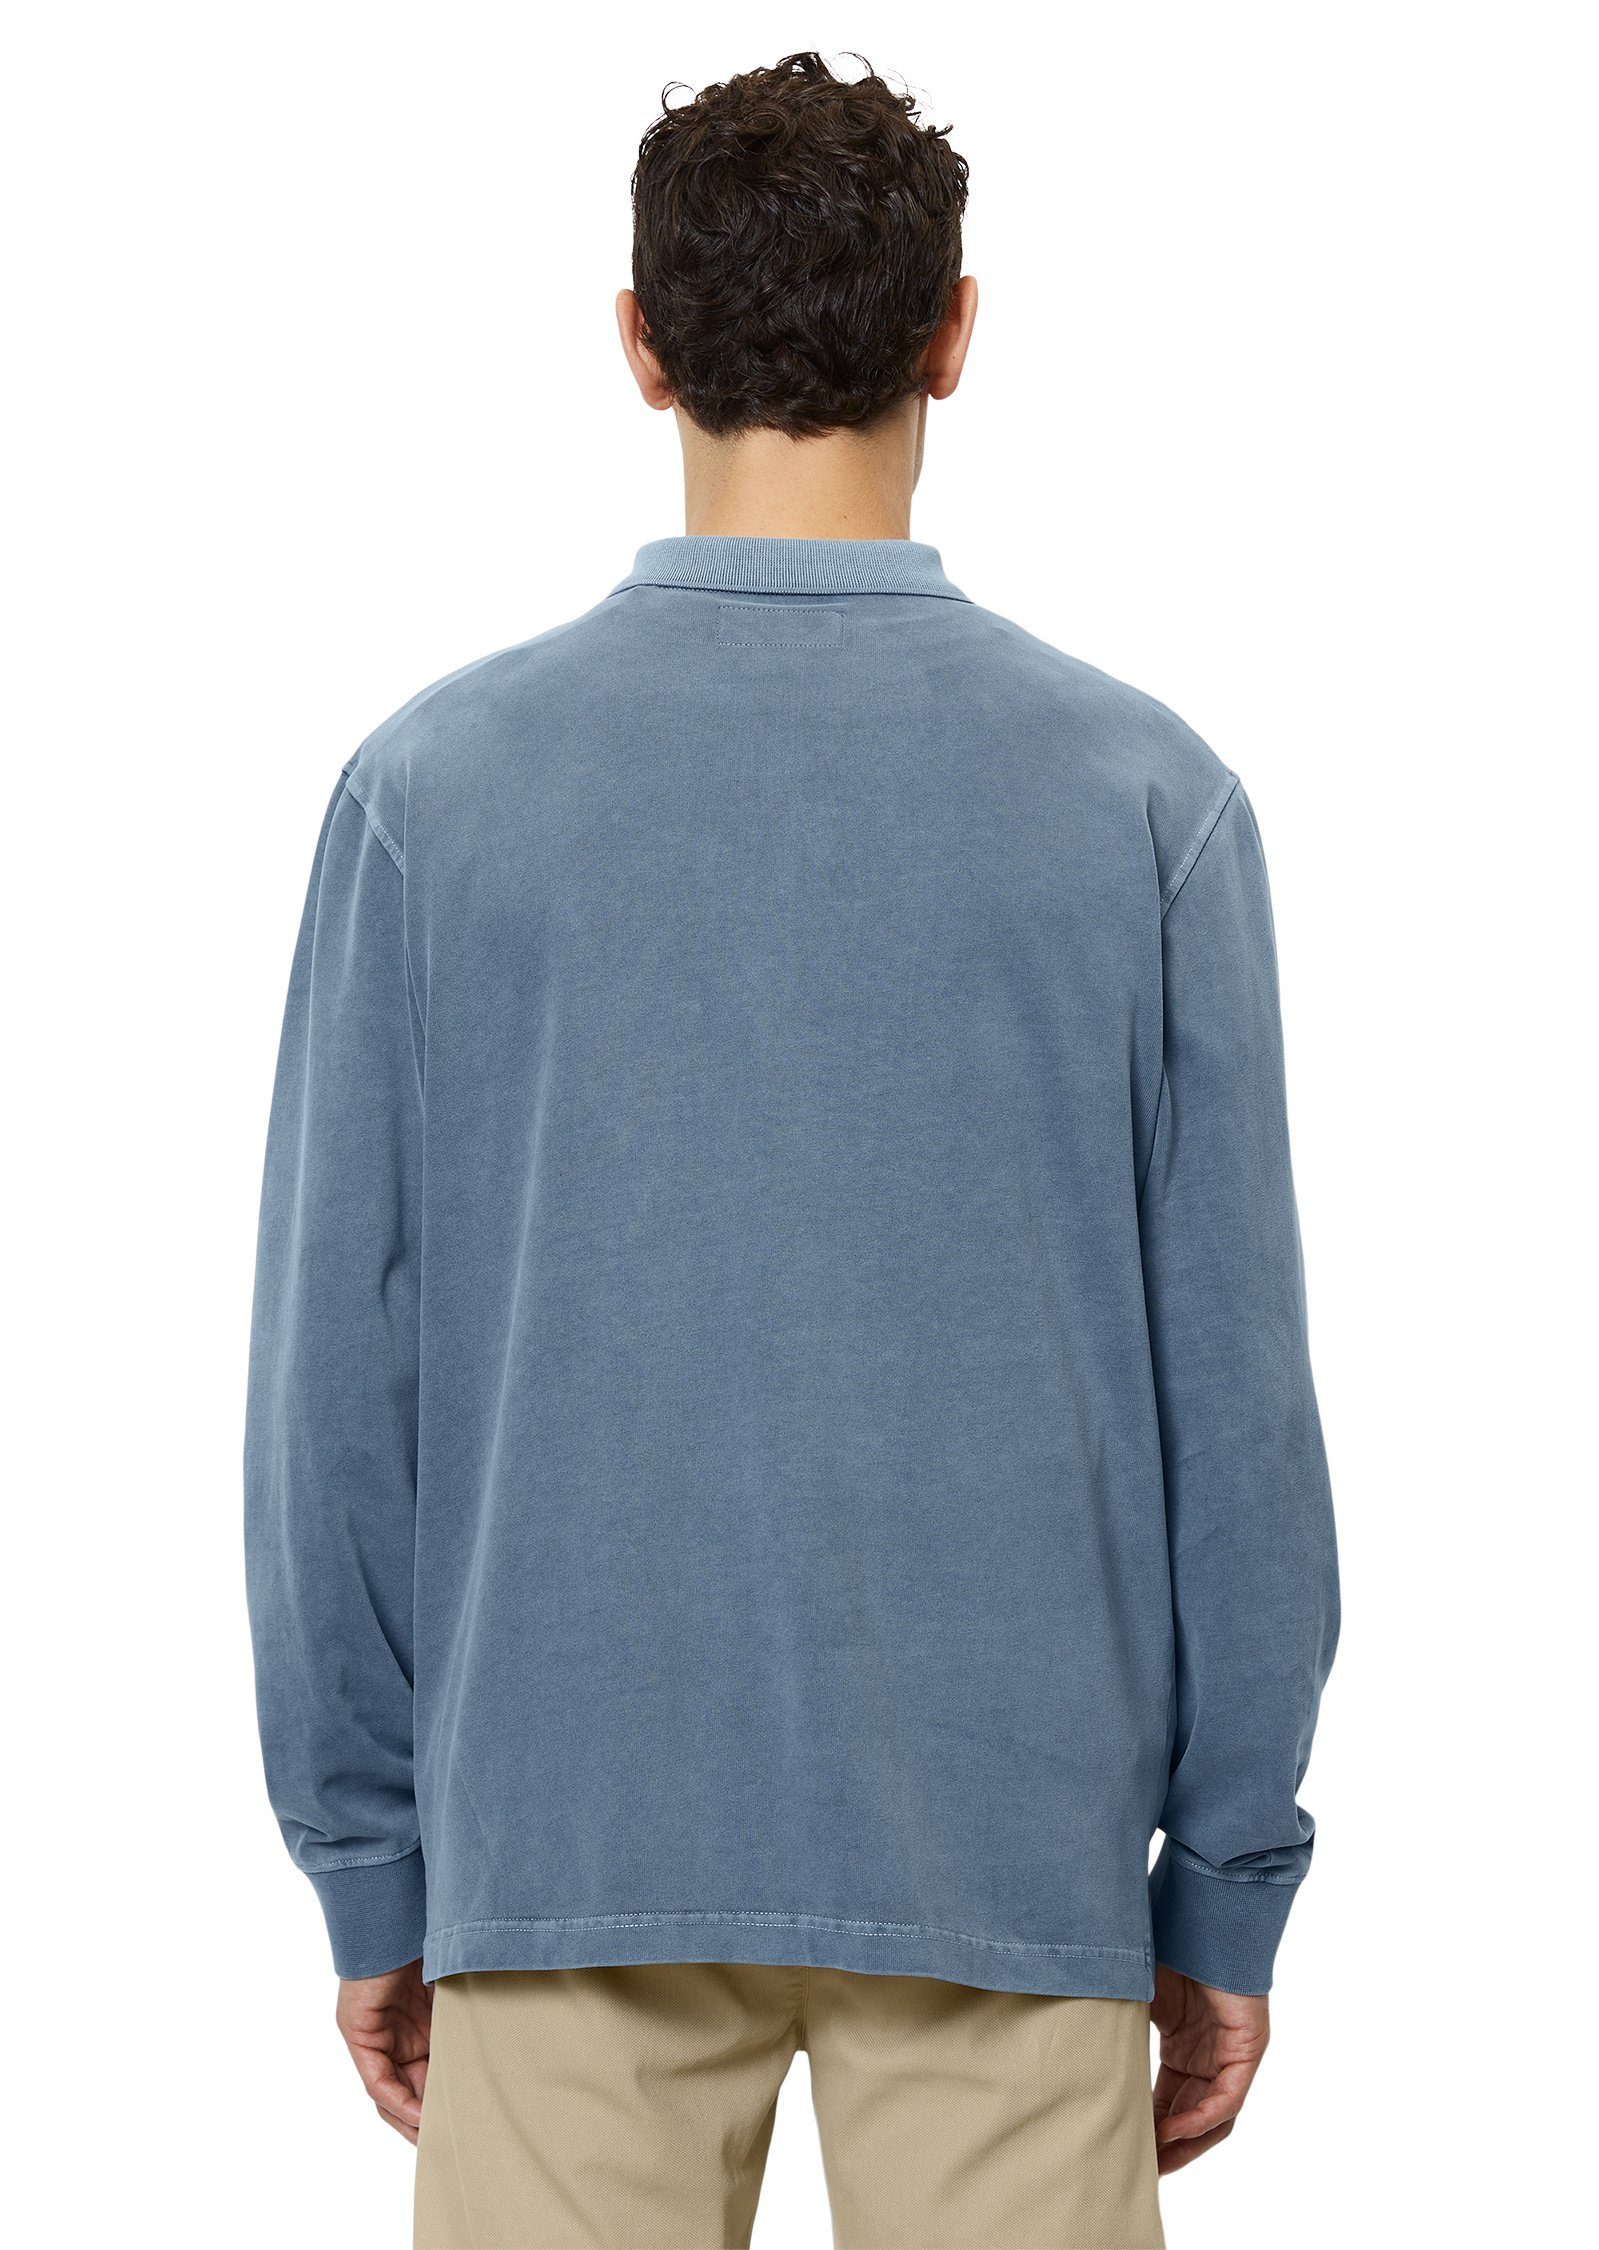 O'Polo Langarm-Poloshirt Marc schwerer blau in Soft-Touch-Jersey-Qualität